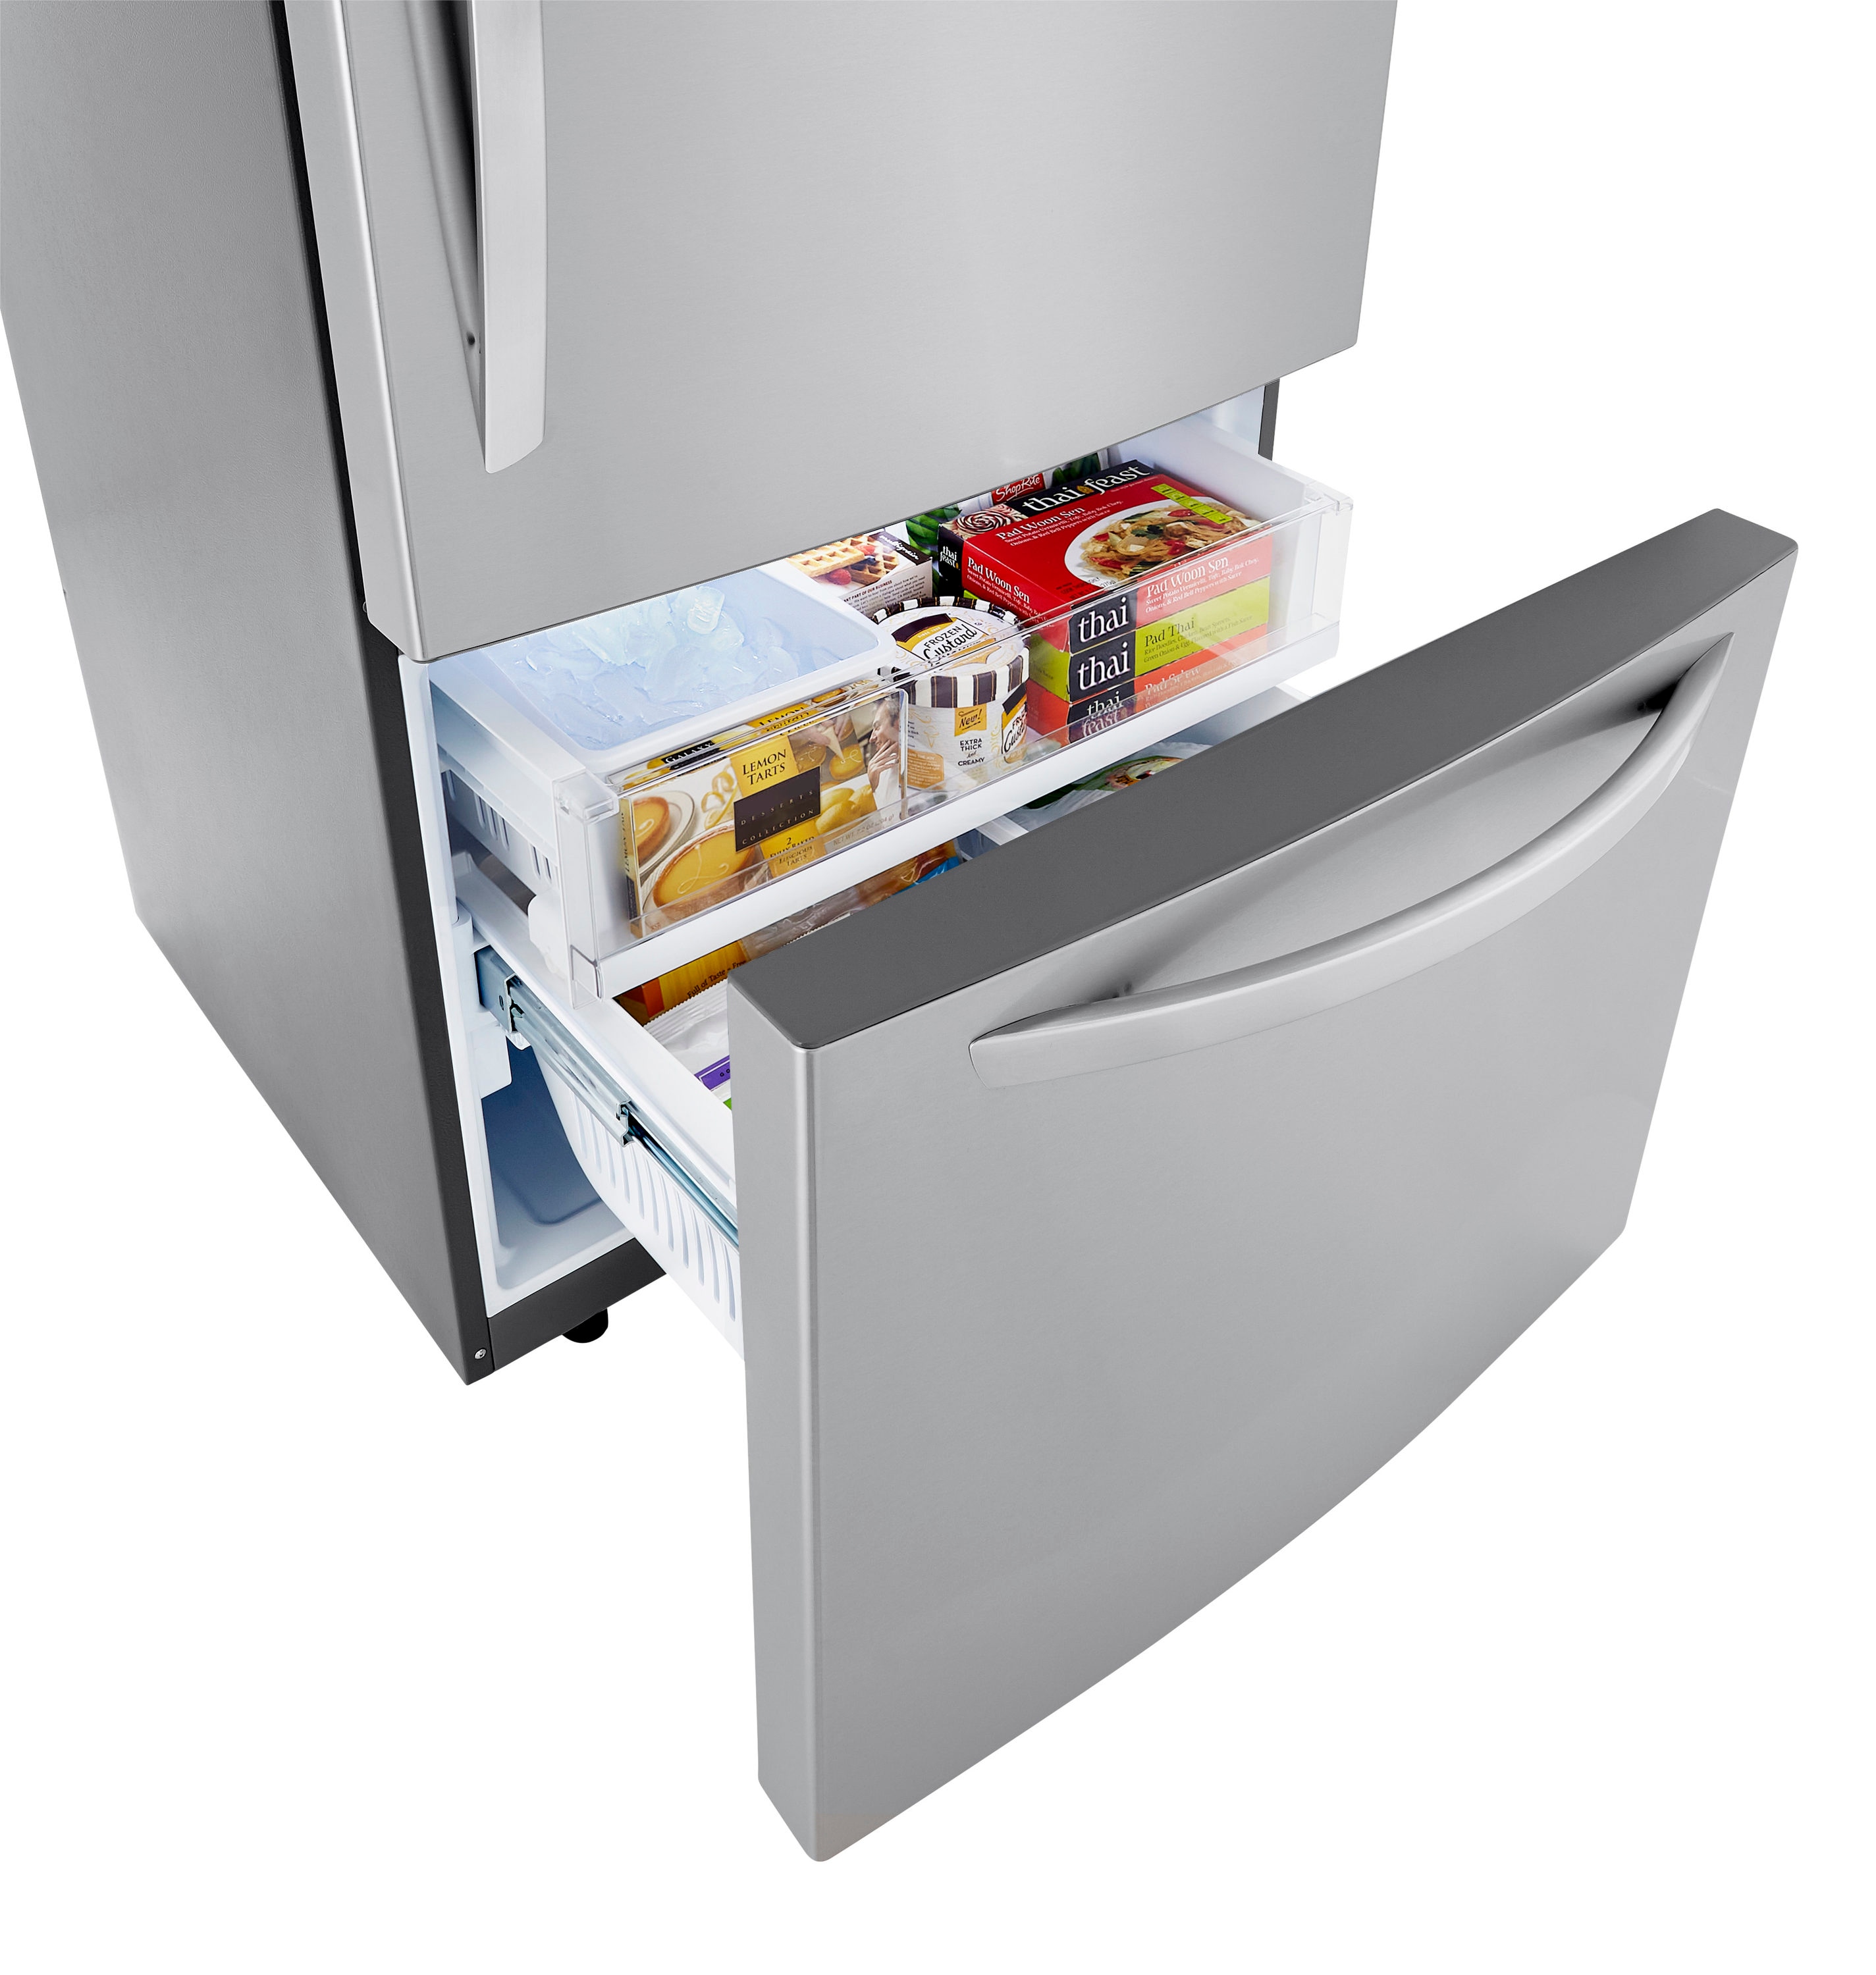 Bottom-Freezer Refrigerators at